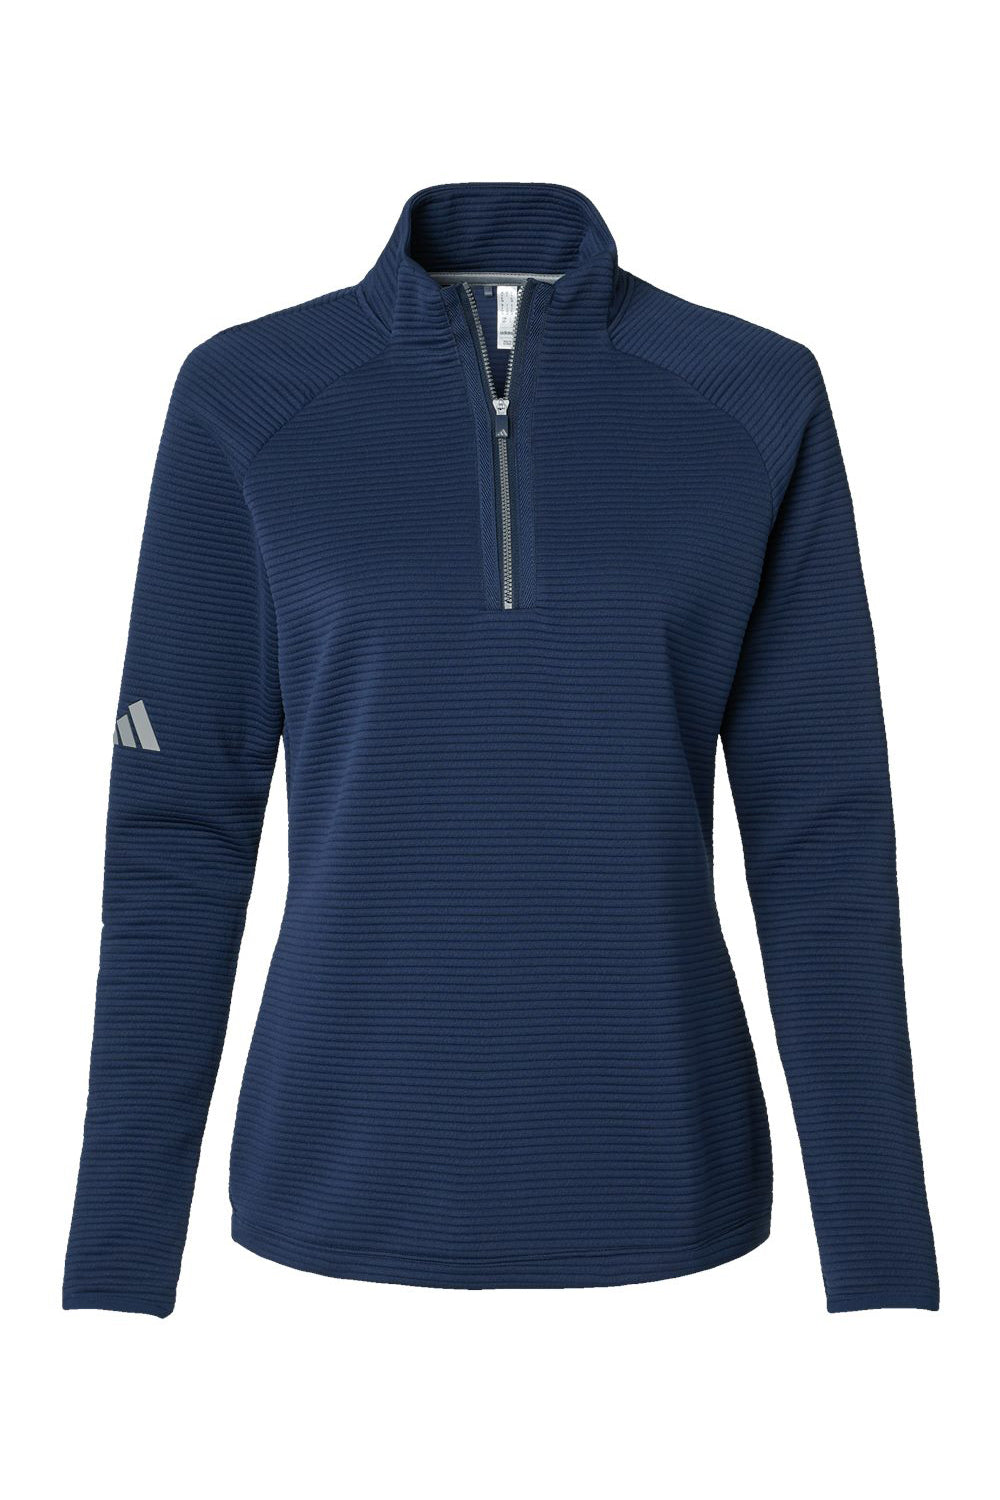 Adidas A589 Womens Spacer 1/4 Zip Sweatshirt Collegiate Navy Blue Flat Front